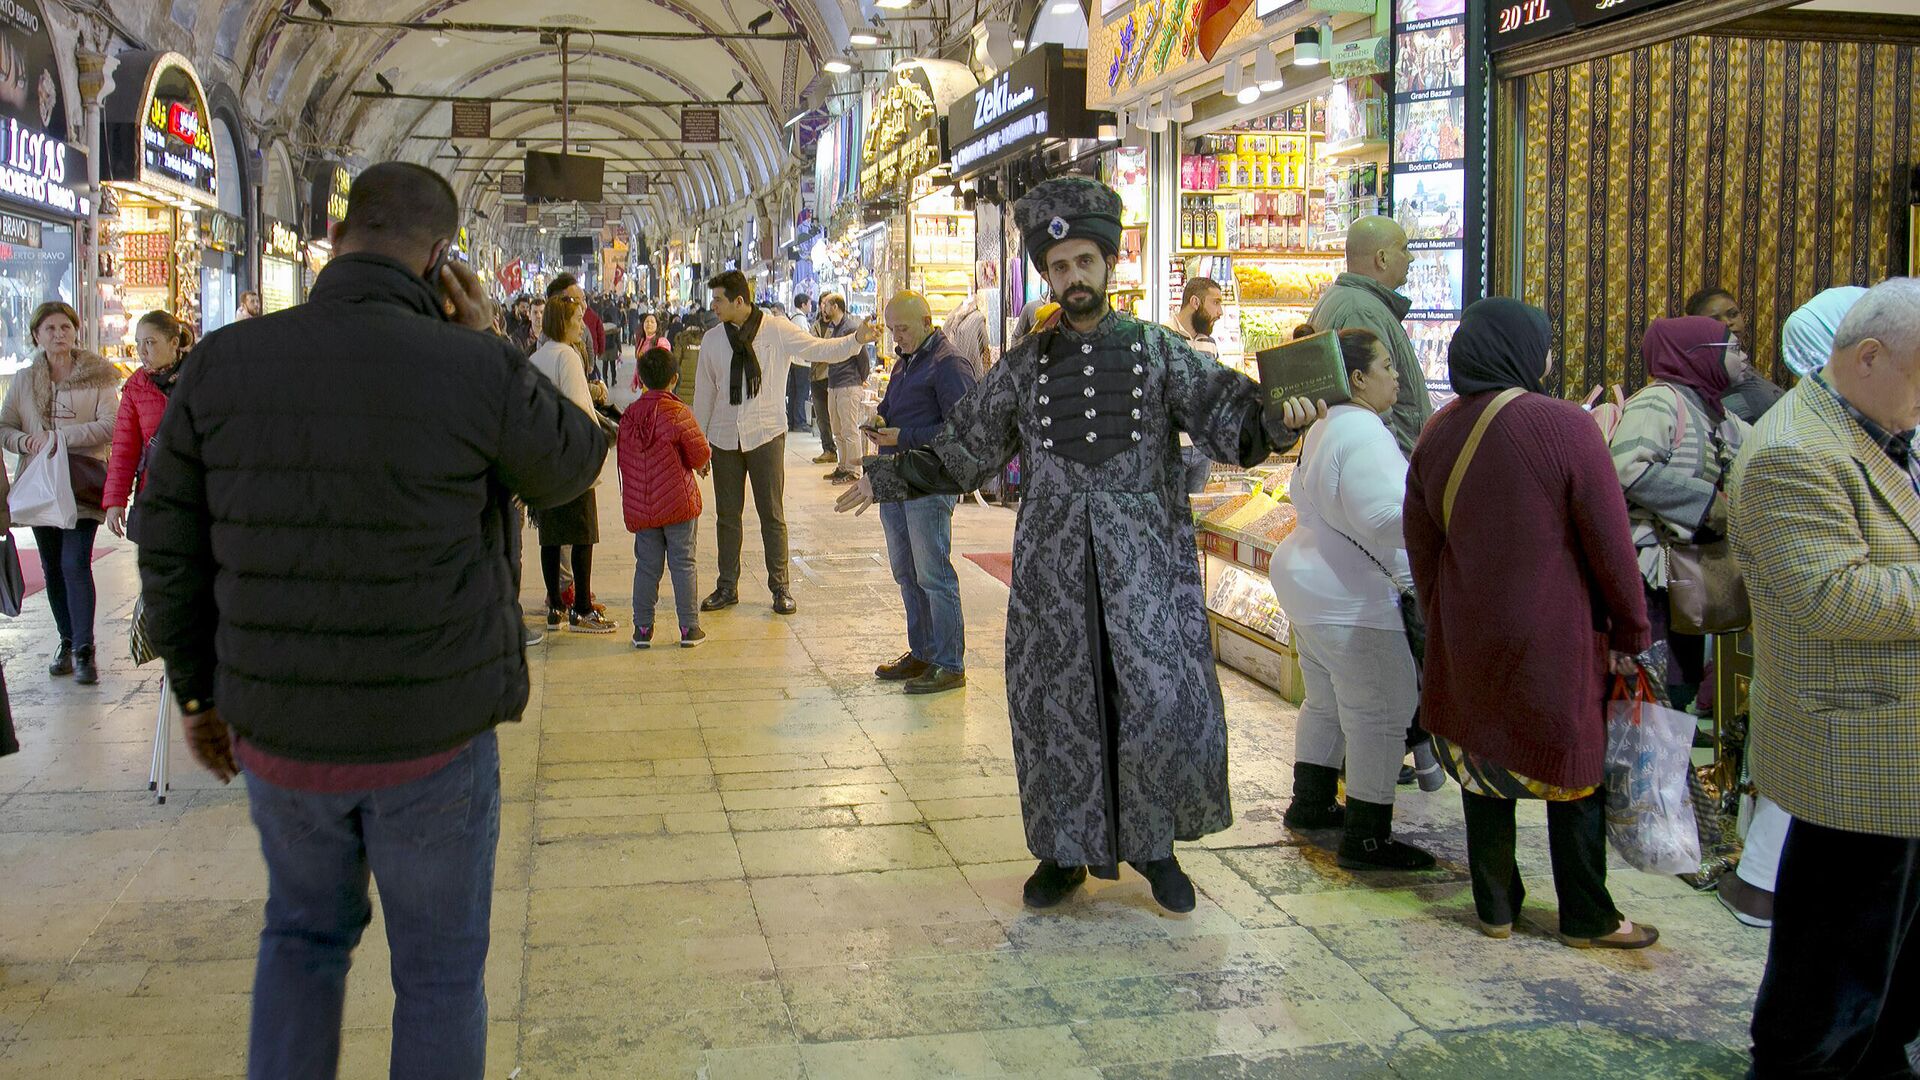 Гранд-базар в Стамбуле - РИА Новости, 1920, 07.12.2020